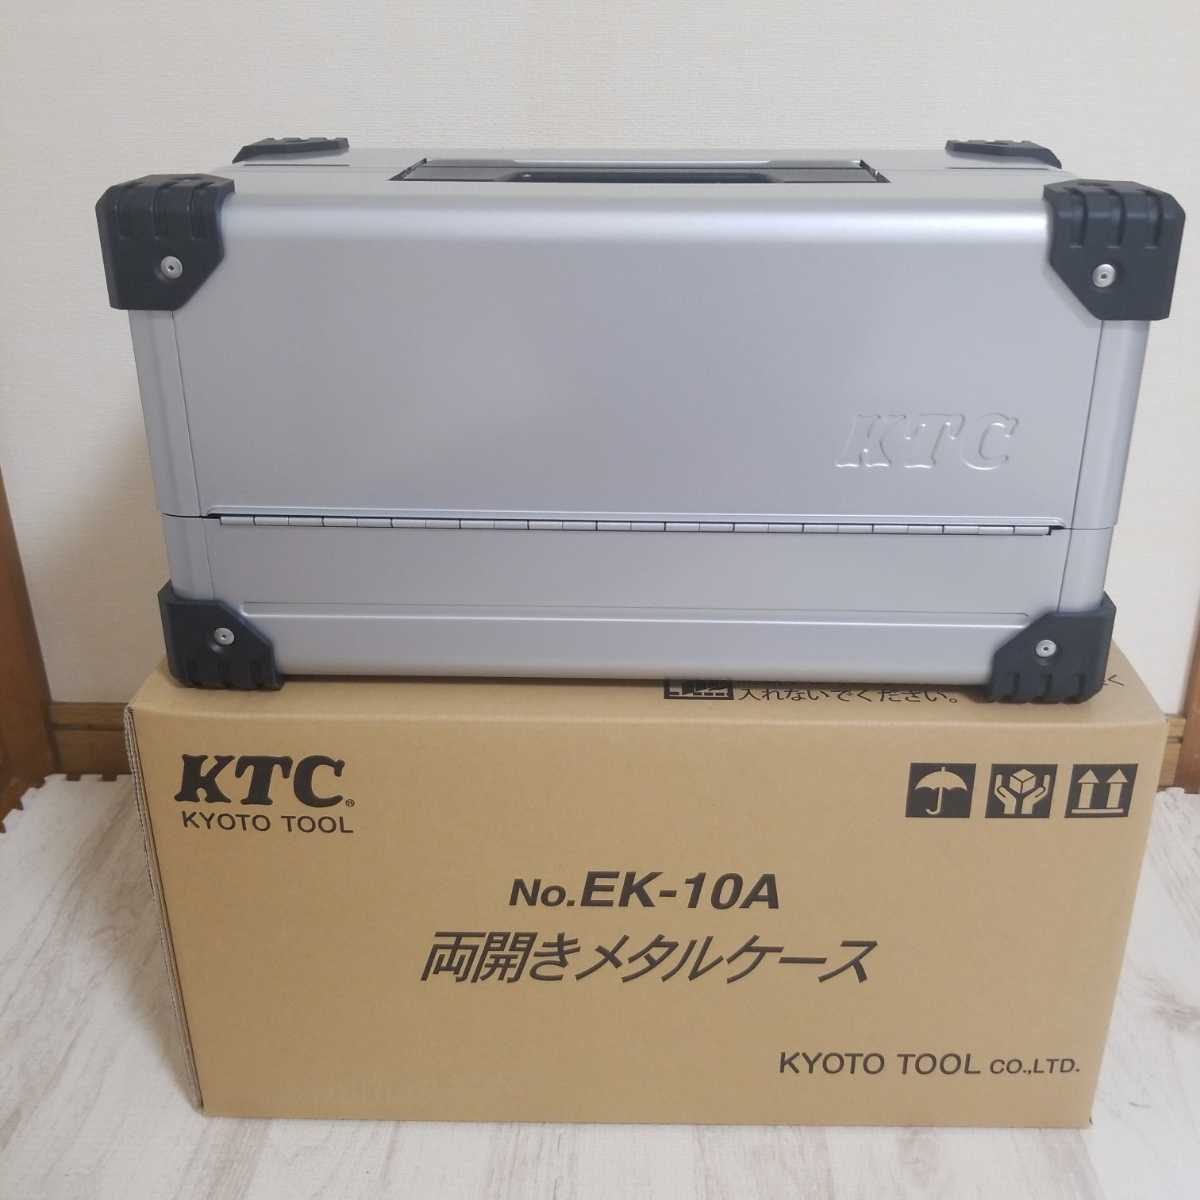 KTC 両開きメタルケース 工具箱 コーナーガード付き 新品 トレーつき